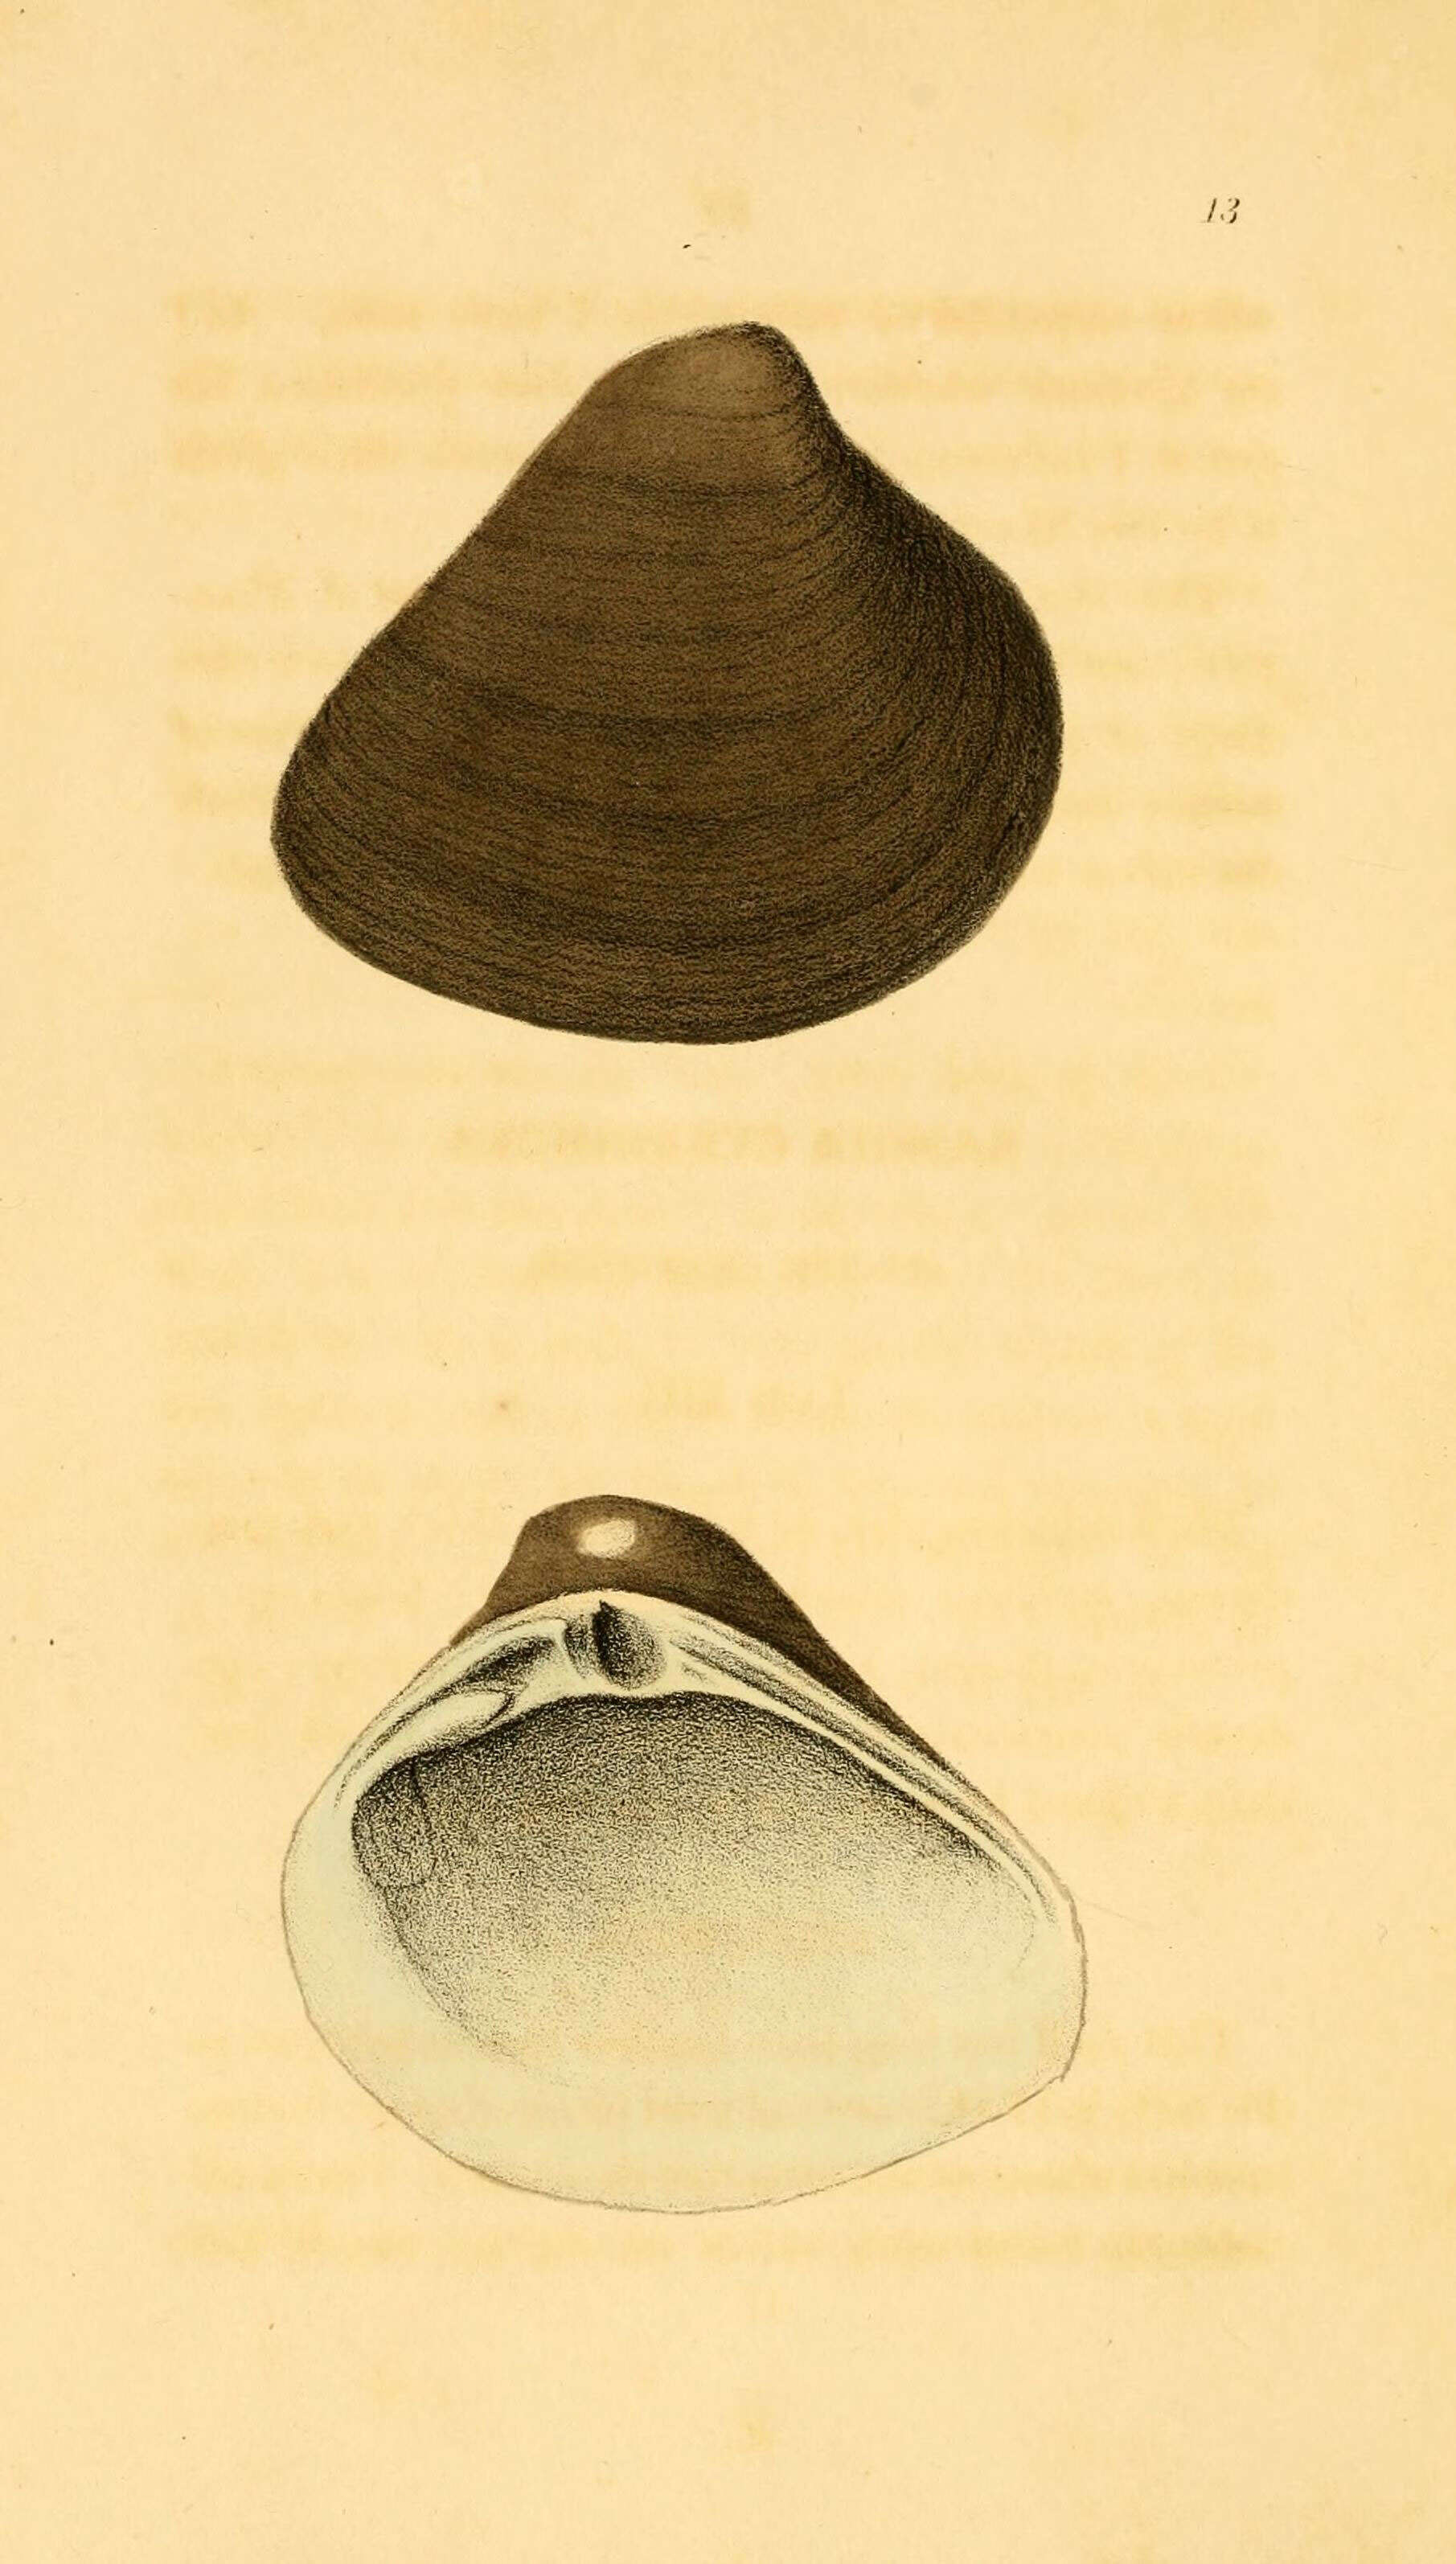 Sivun Mactroidea Lamarck 1809 kuva